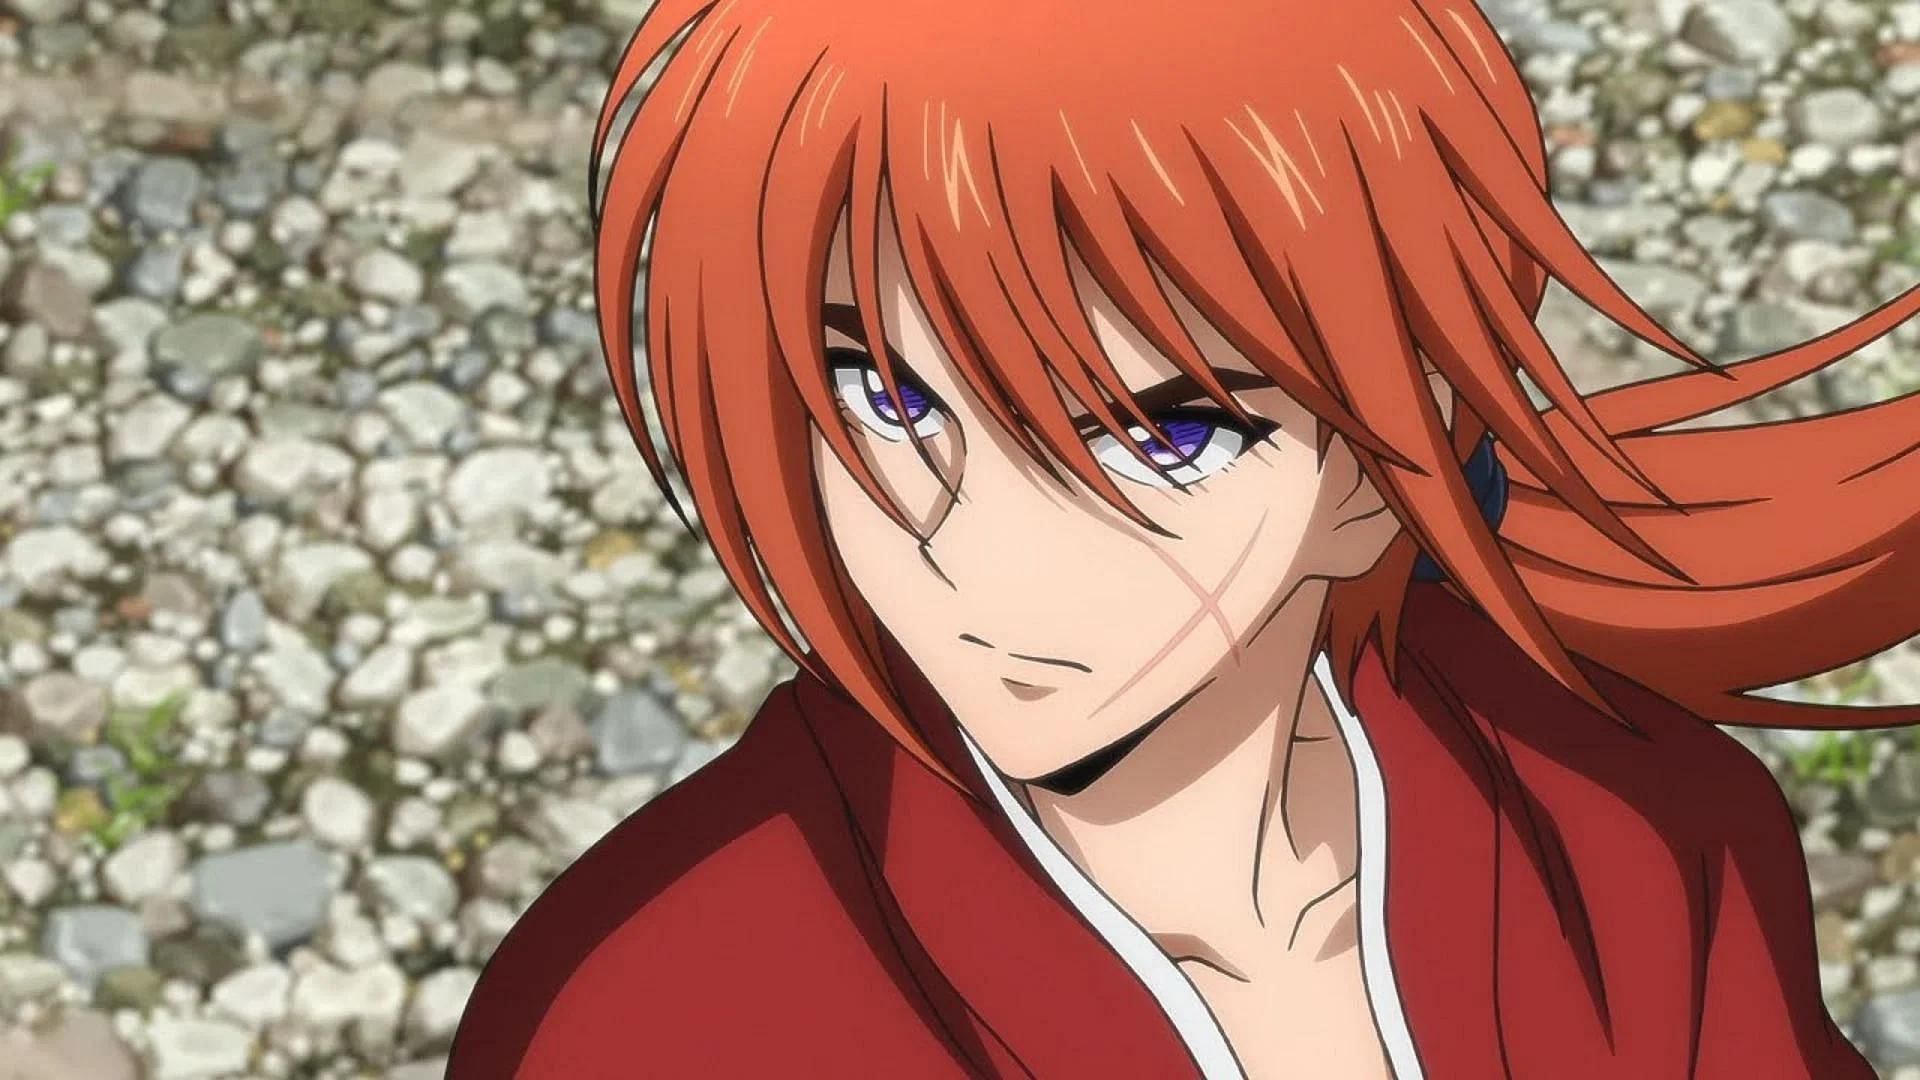 Kenshin Himura (Image via Studio Deen)